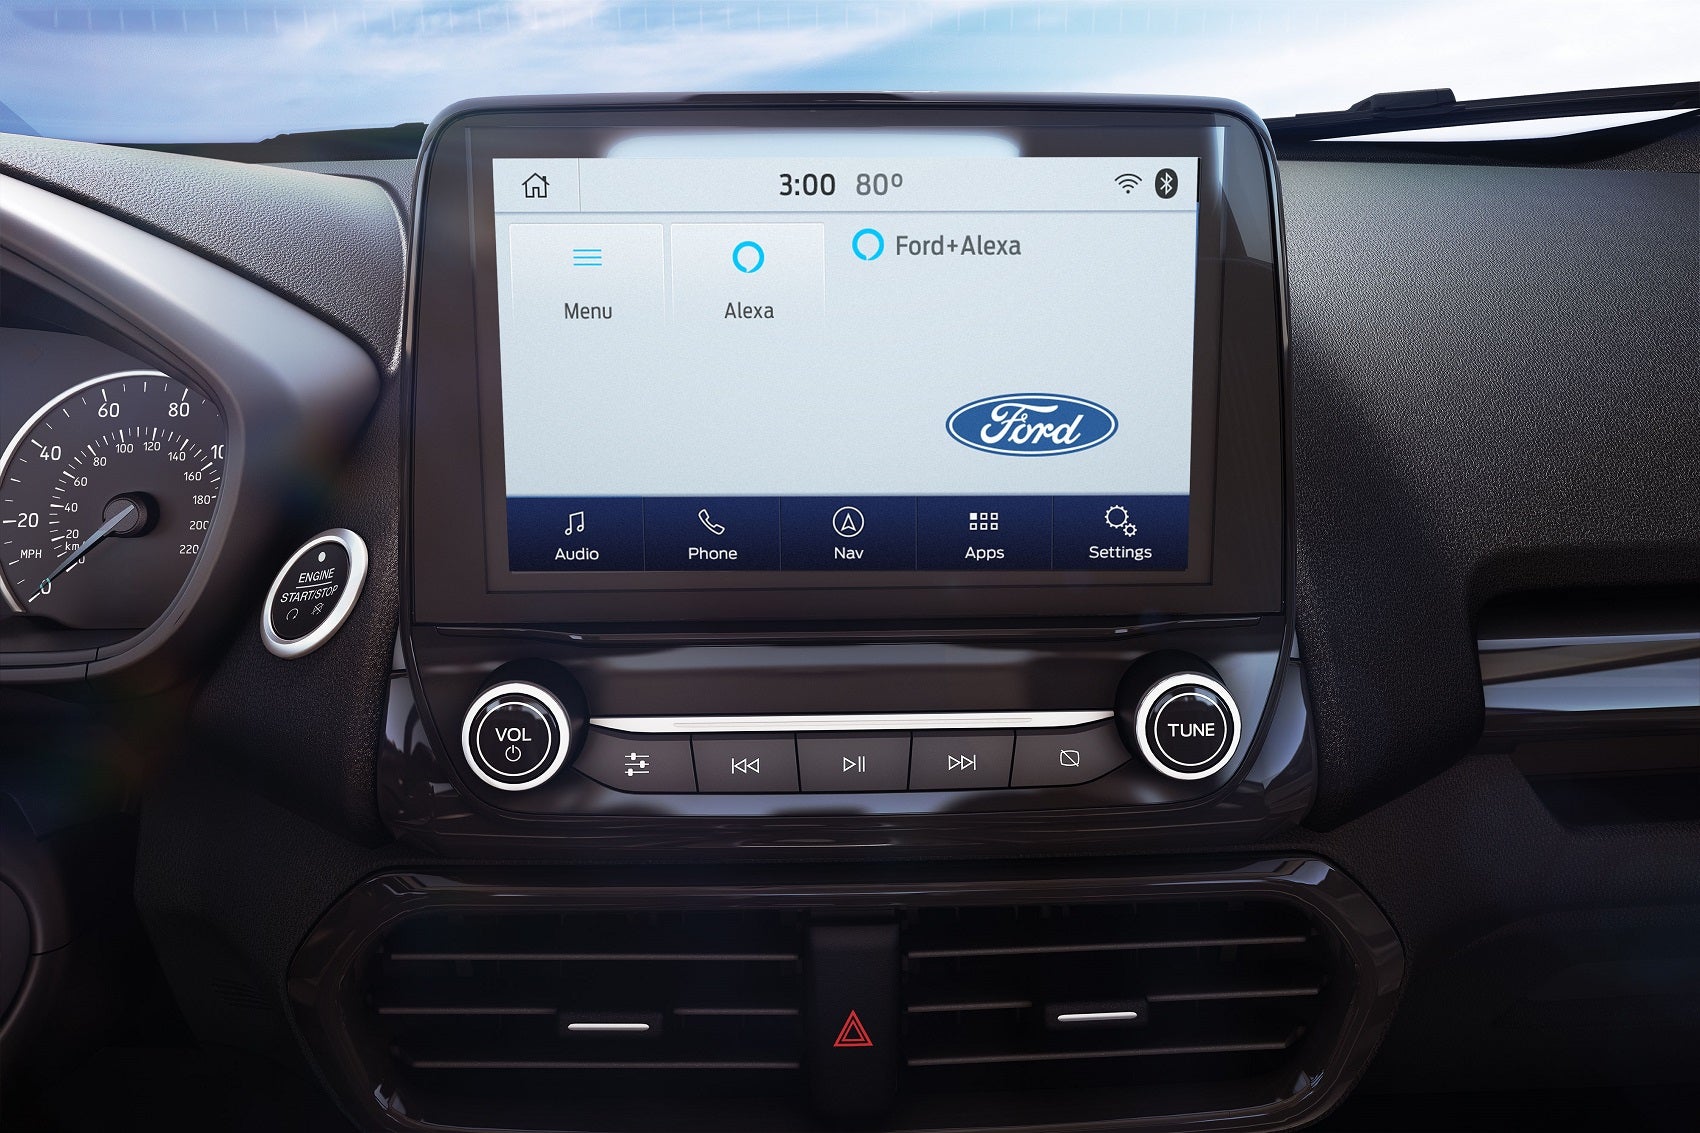 Ford EcoSport Navigation System